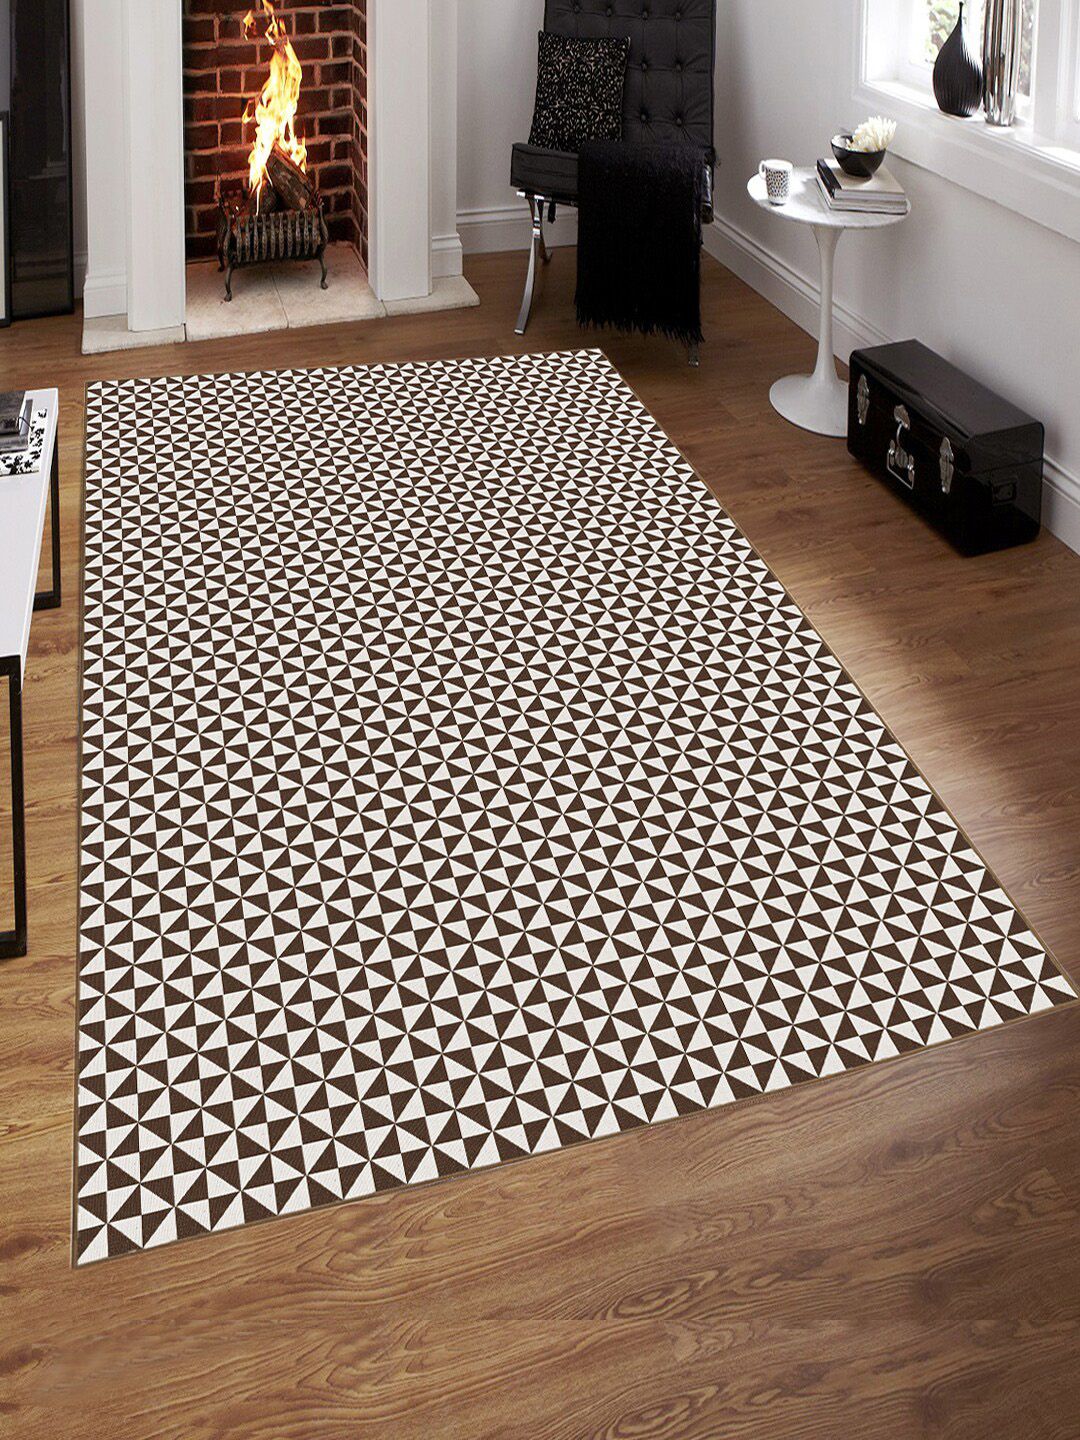 Saral Home Brown & White Geometric Printed Anti-Skid Carpet Price in India